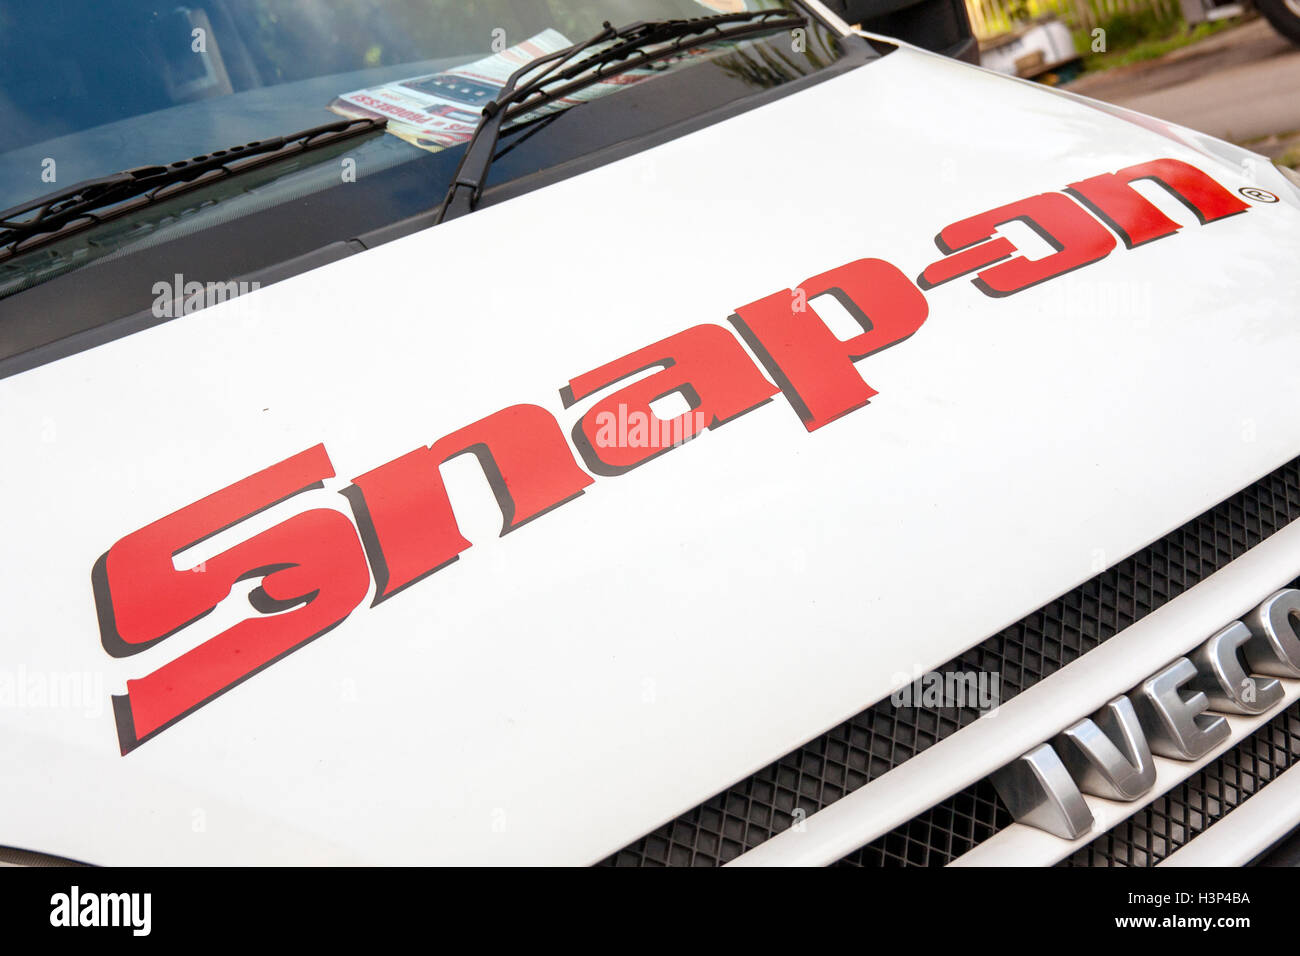 Snap-on Tools Van Stockfoto